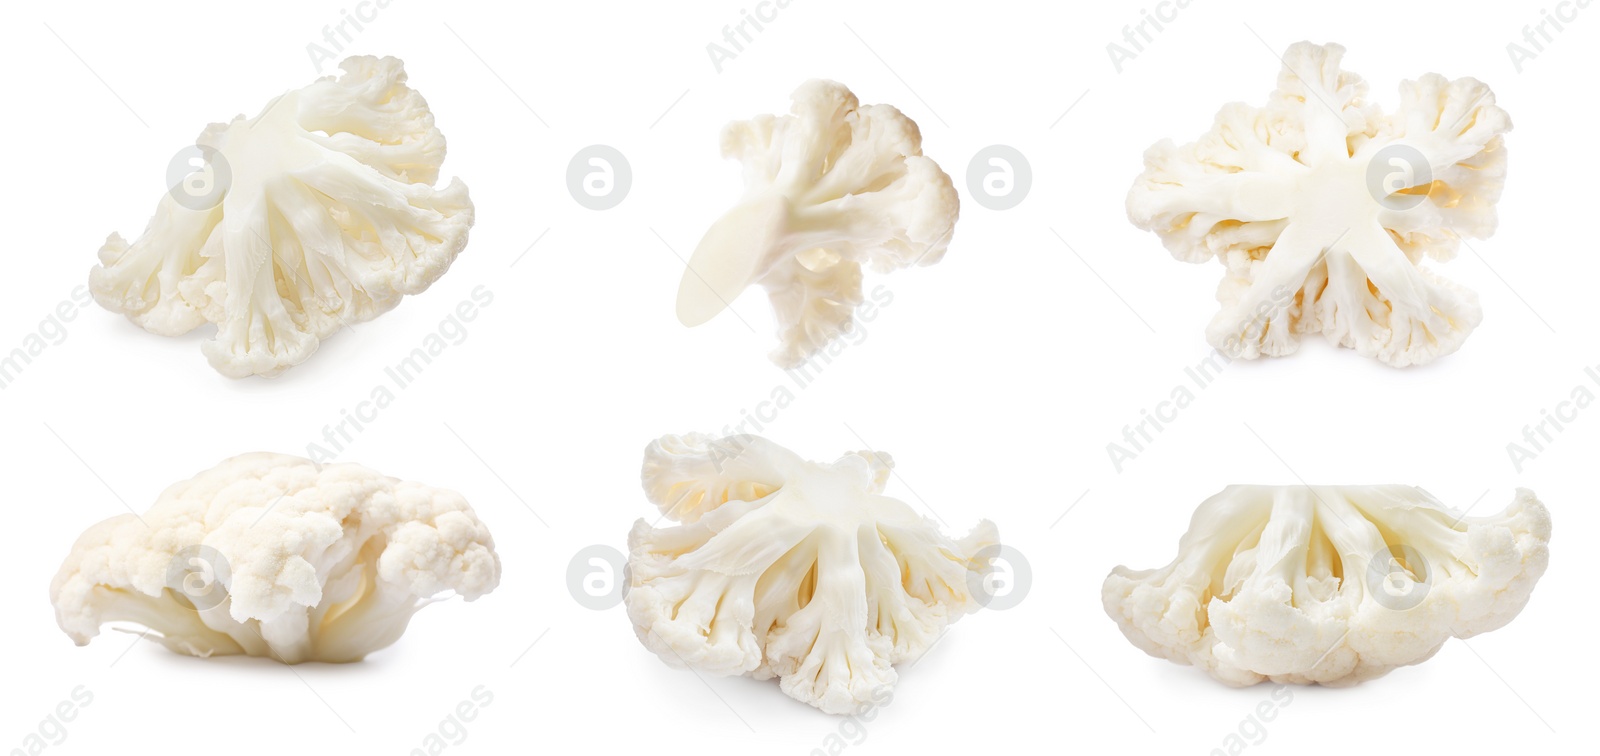 Image of Collage of fresh raw cauliflower florets on white background